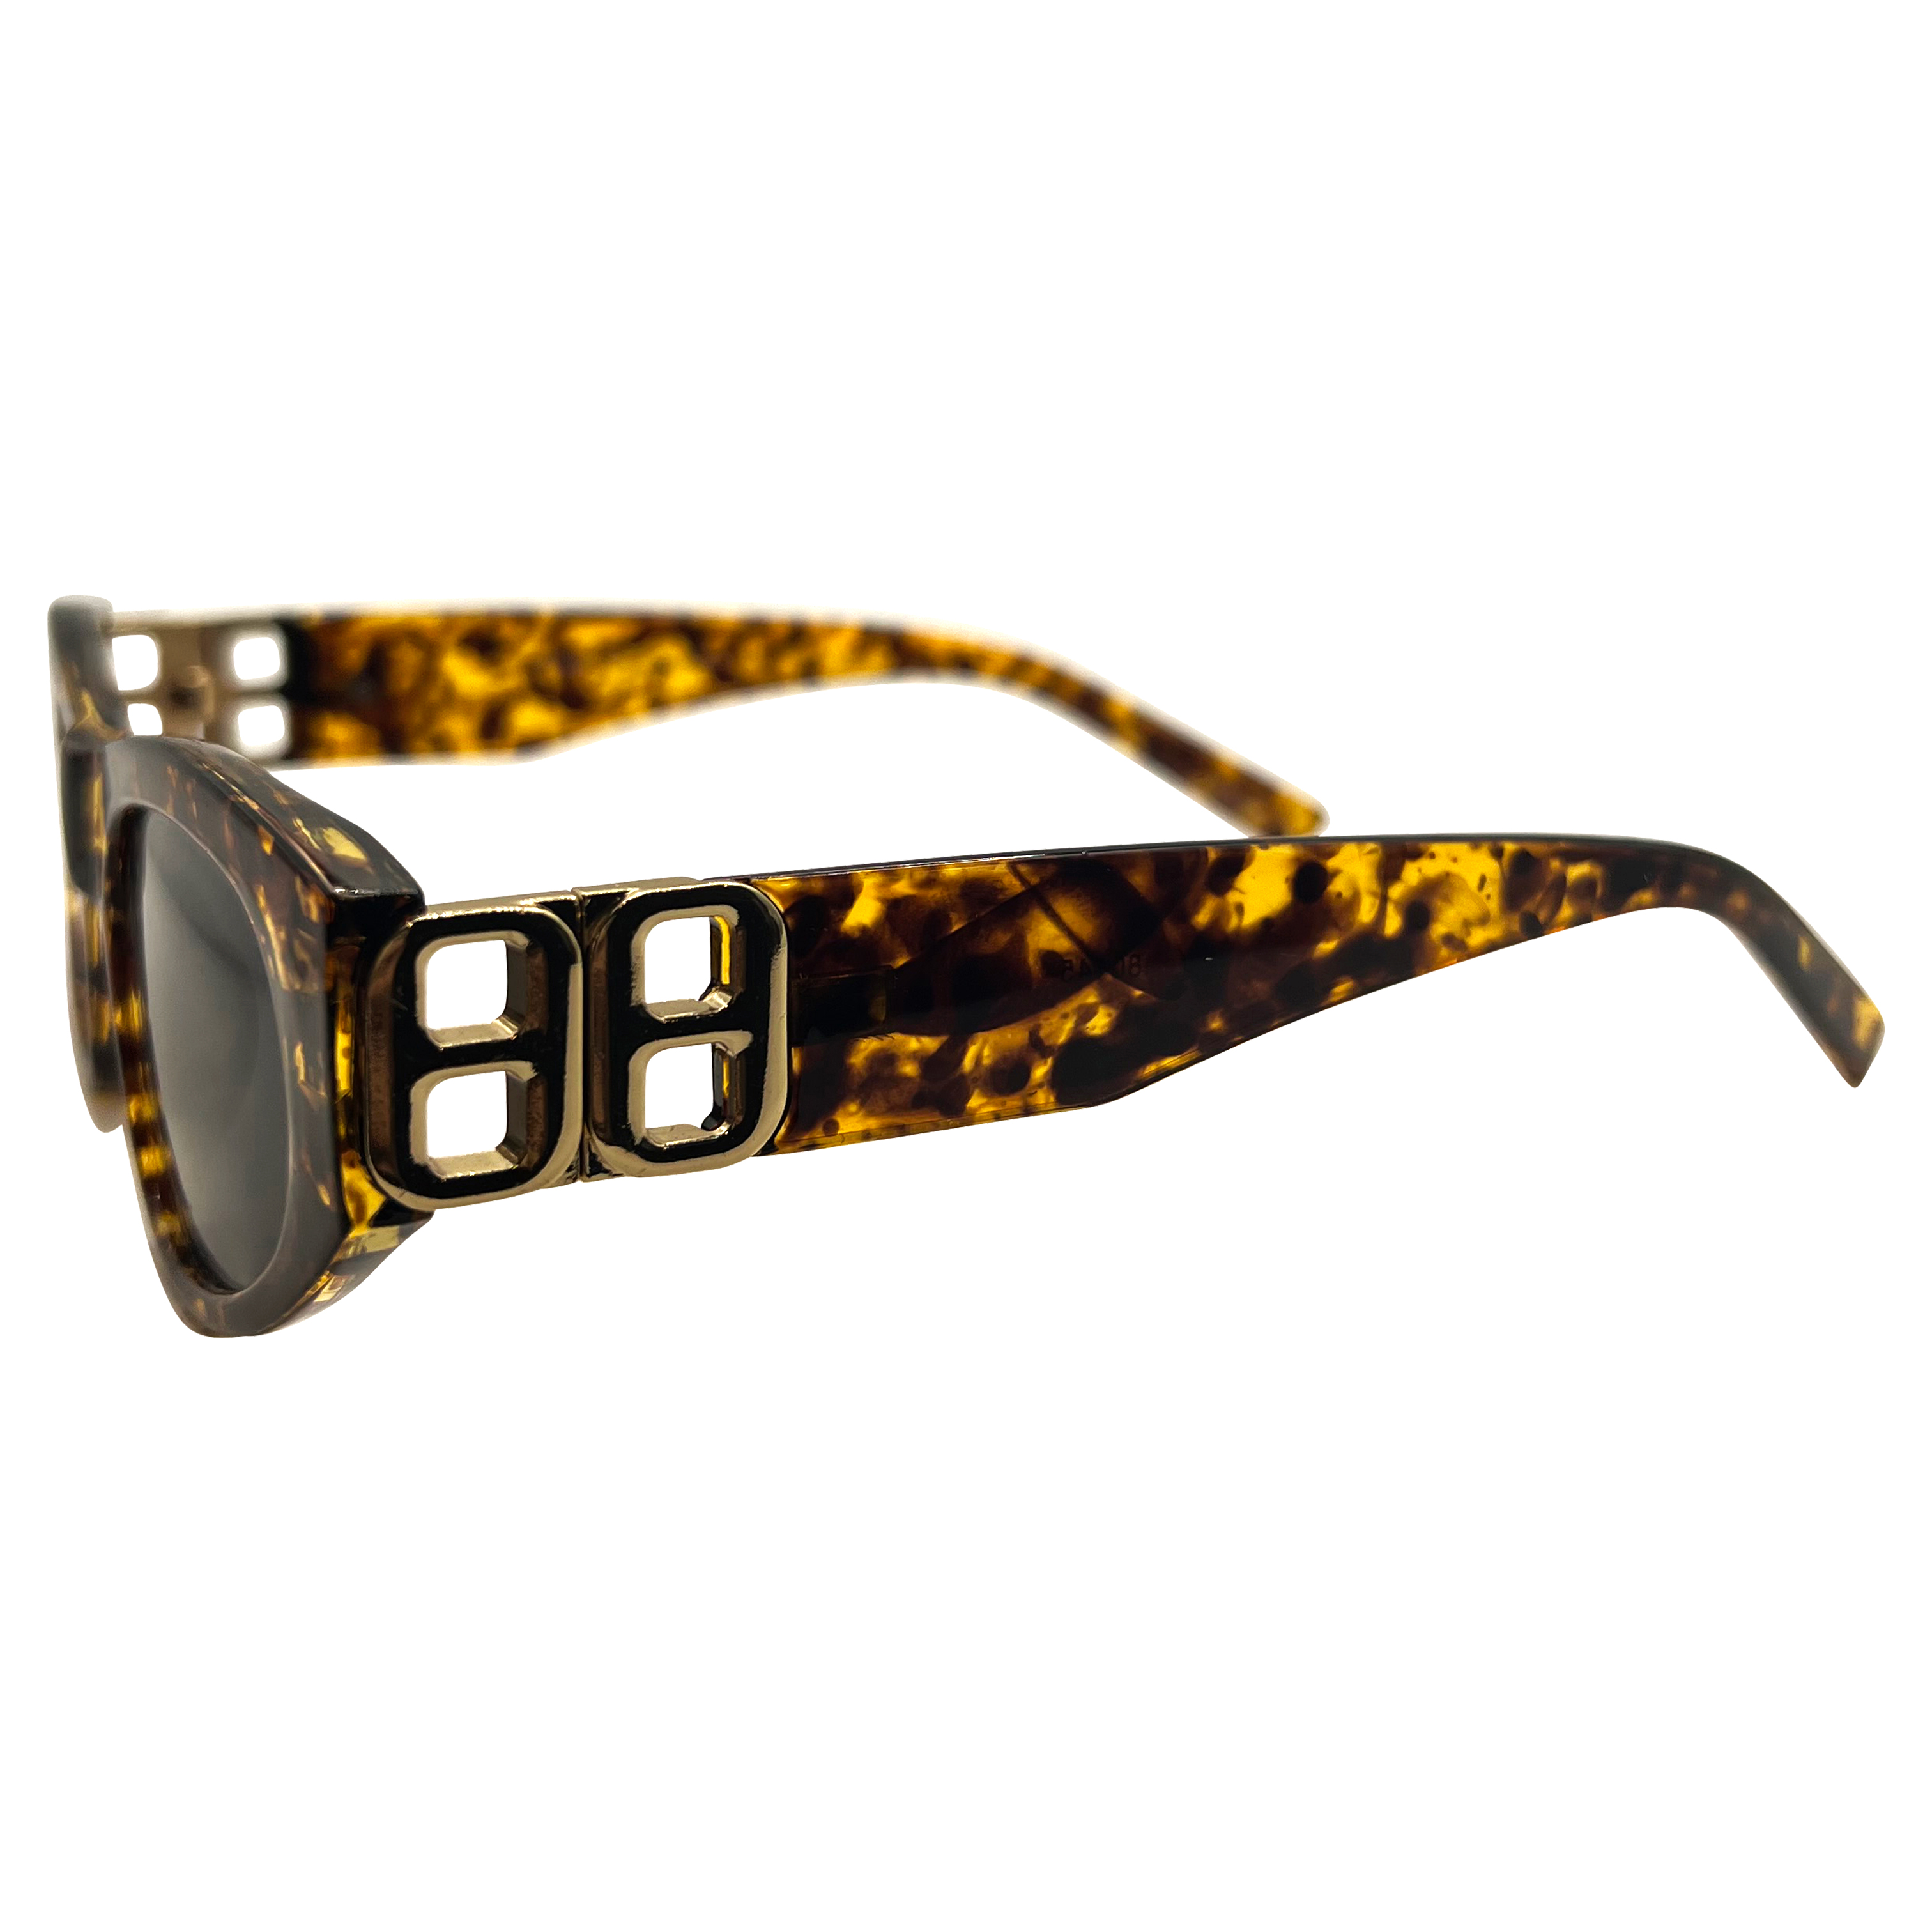 BOWLS Tortoise Cat-Eye Sunglasses